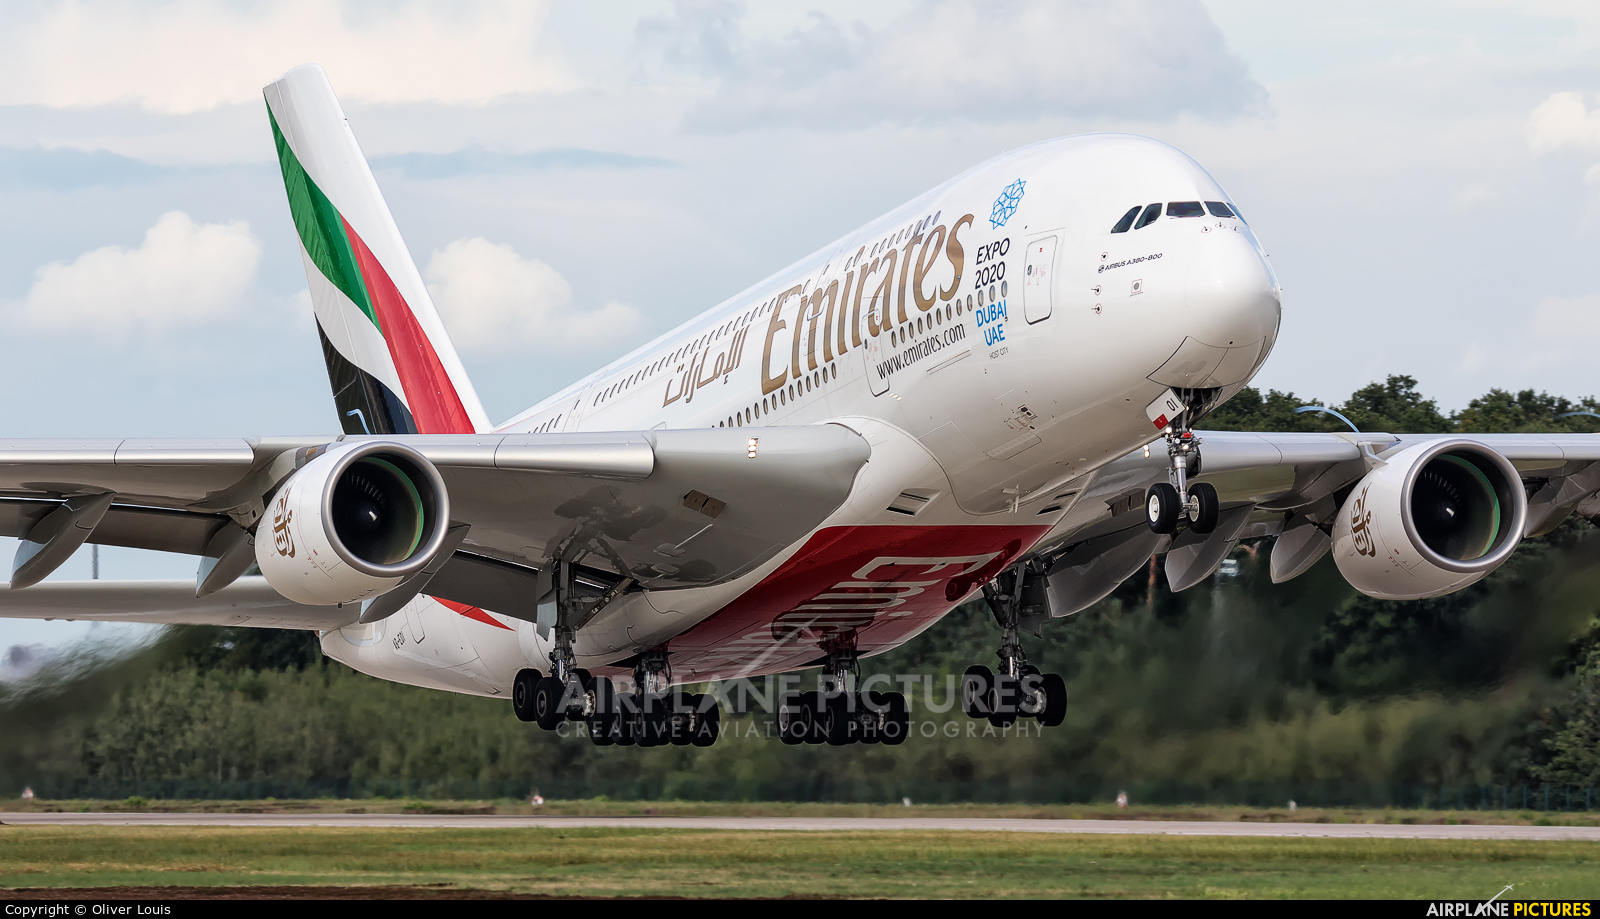 Emirates Airlines A6-EOI aircraft at Frankfurt